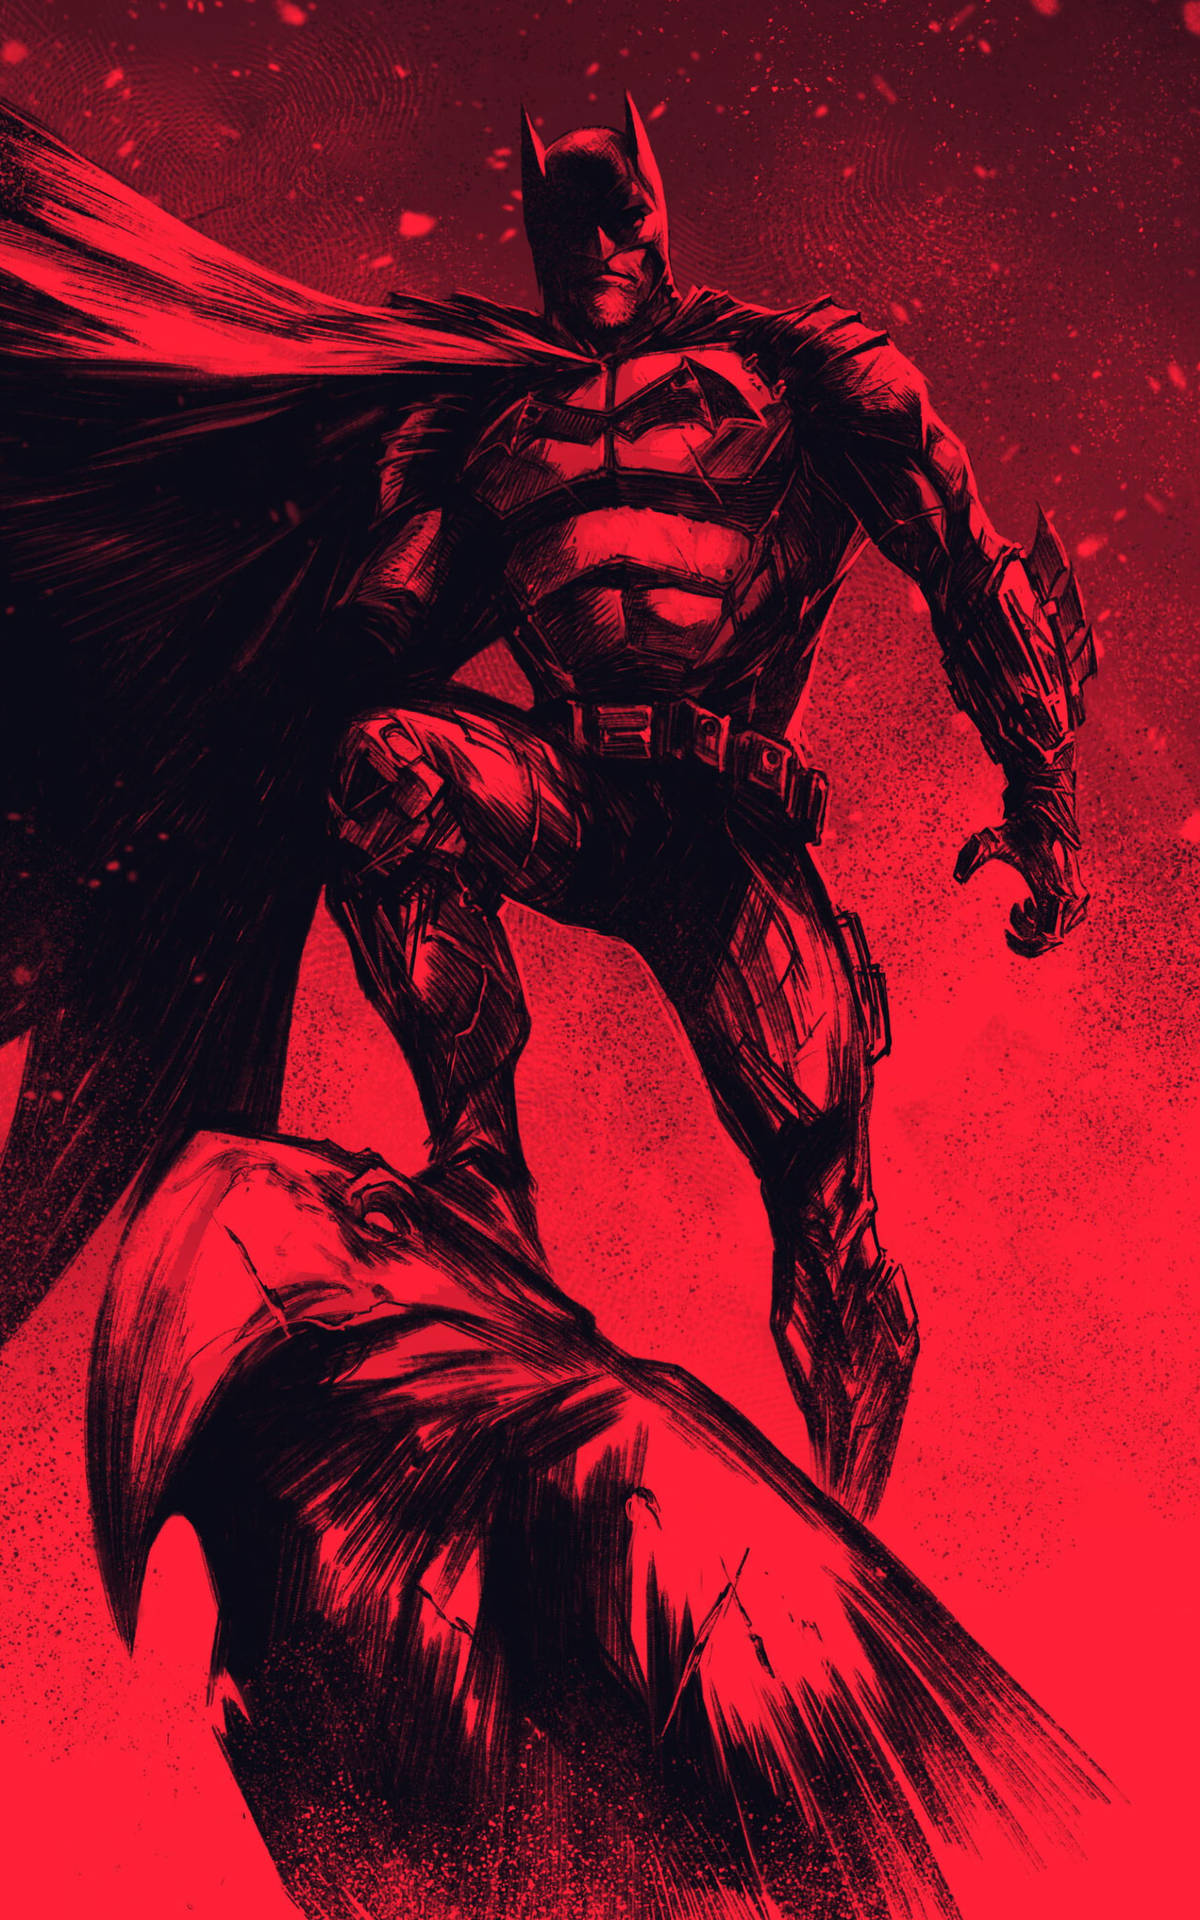 Caption: Dynamic Batman Illustration For Phone Background